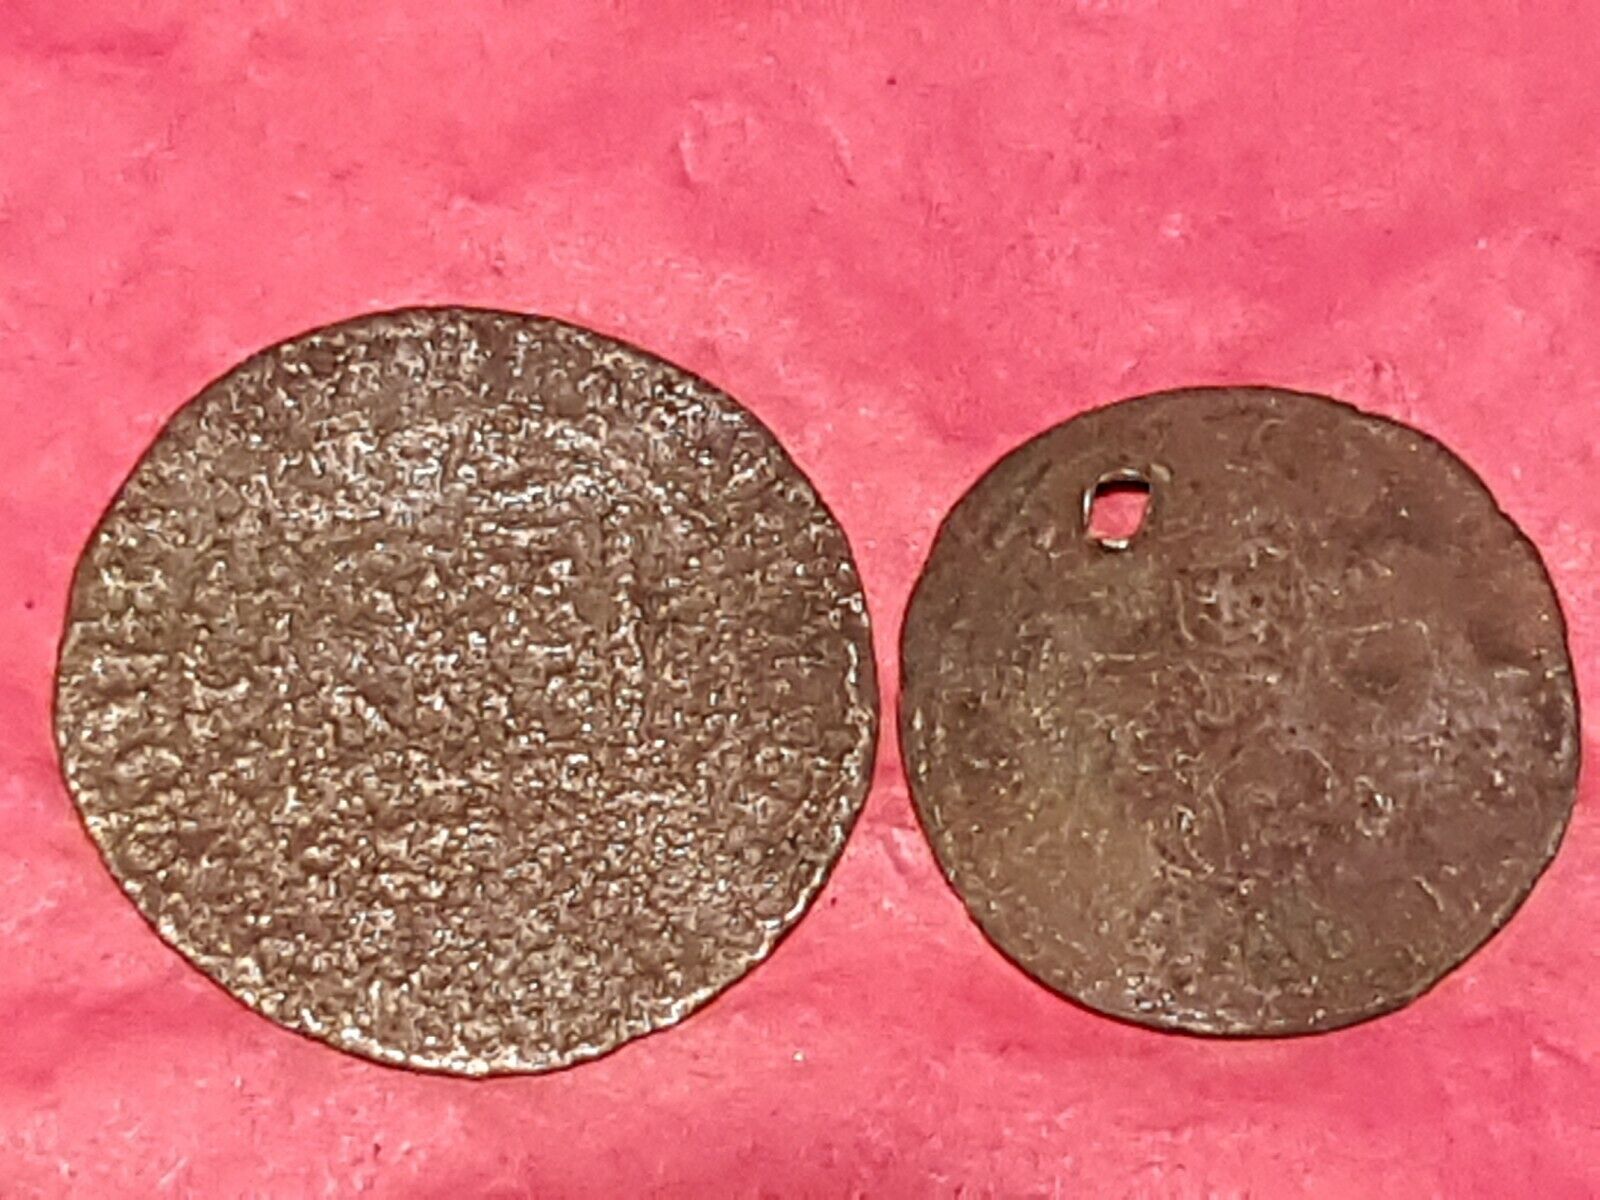 Two very worn unresearched copper alloy jettons. Please read description. L147j